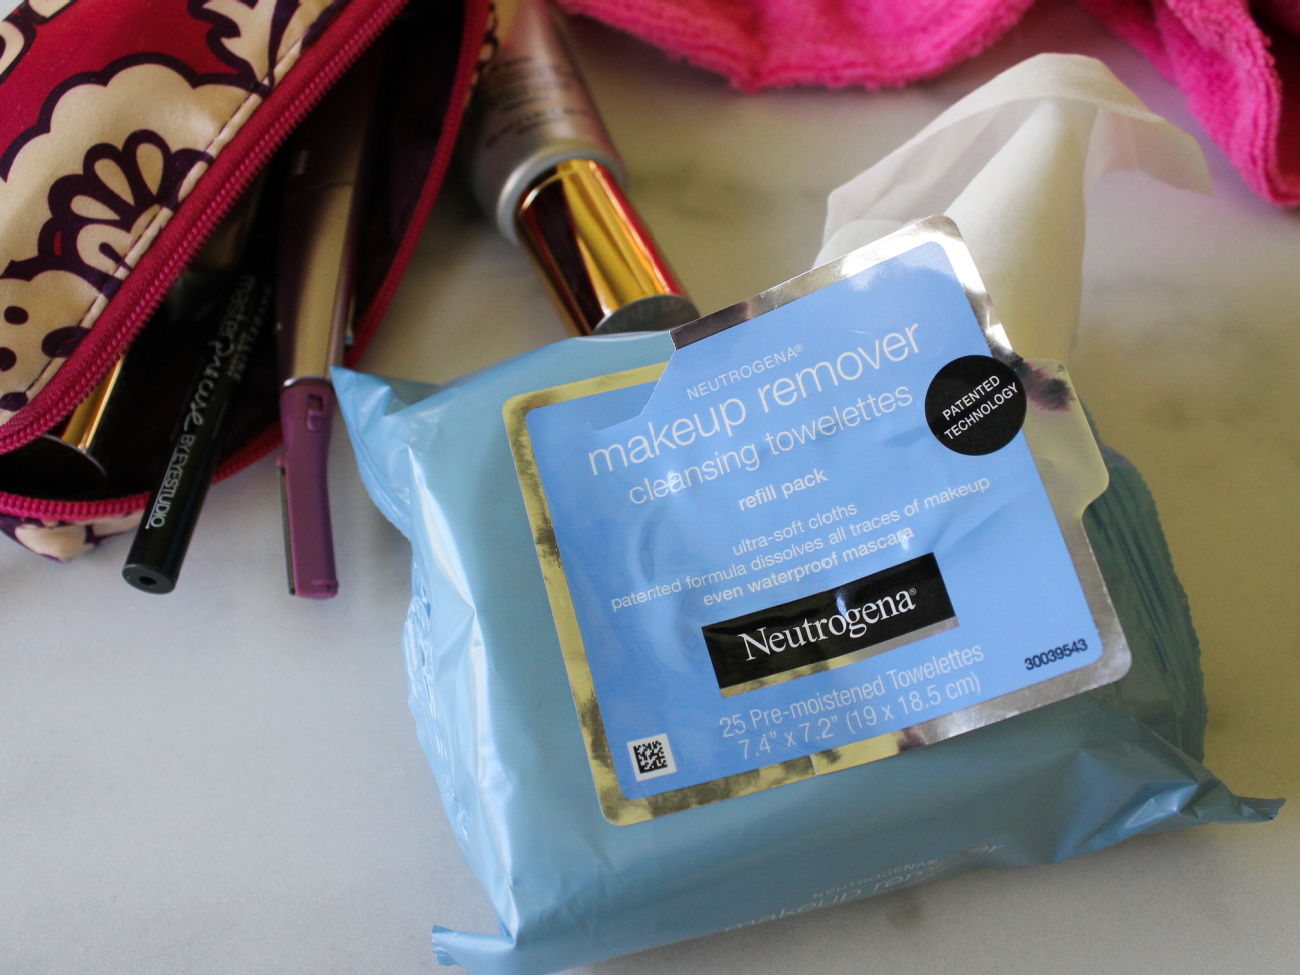 Neutrogena Makeup Remover Cleansing Towelettes Just $2.49 At Kroger